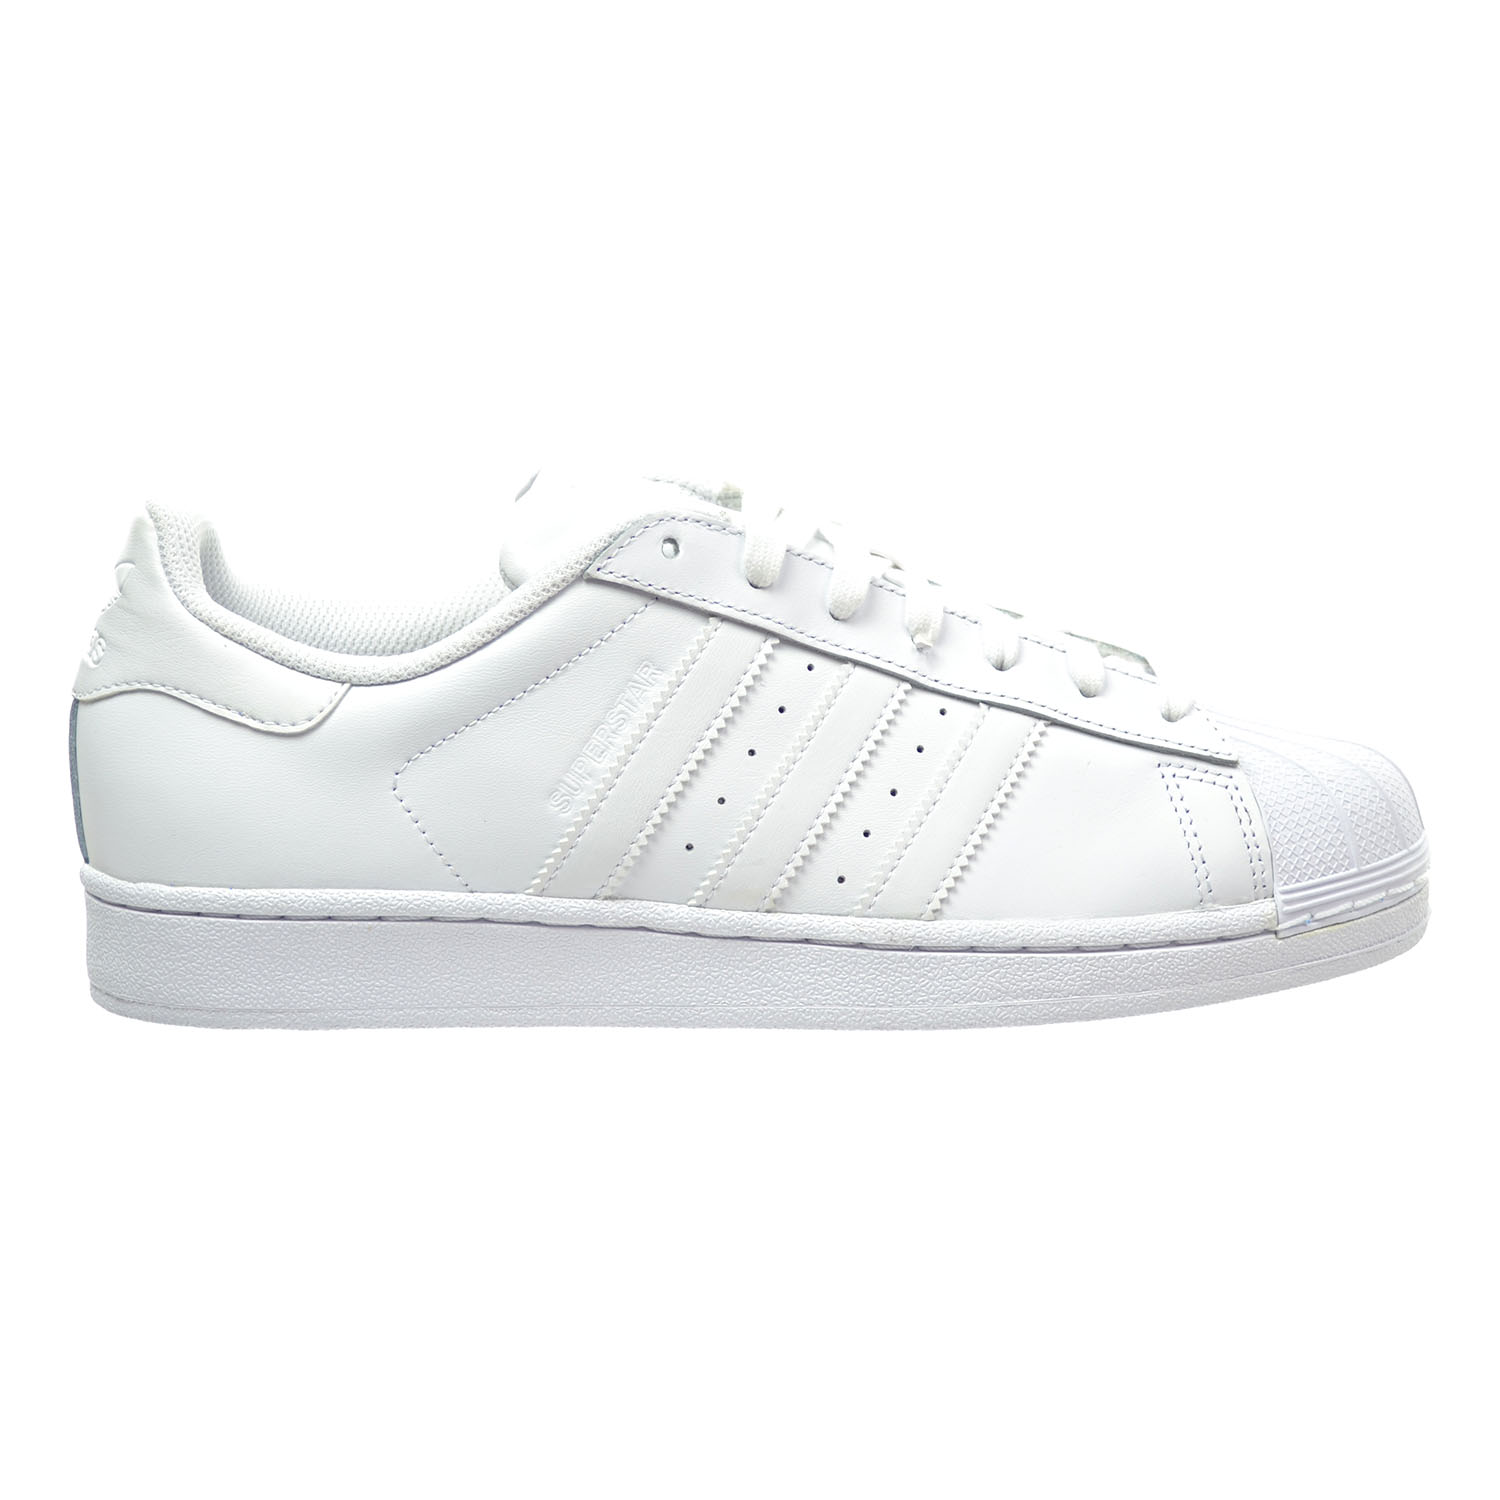 Adidas Superstar W Women's Basketball Shoes White s85139 | eBay